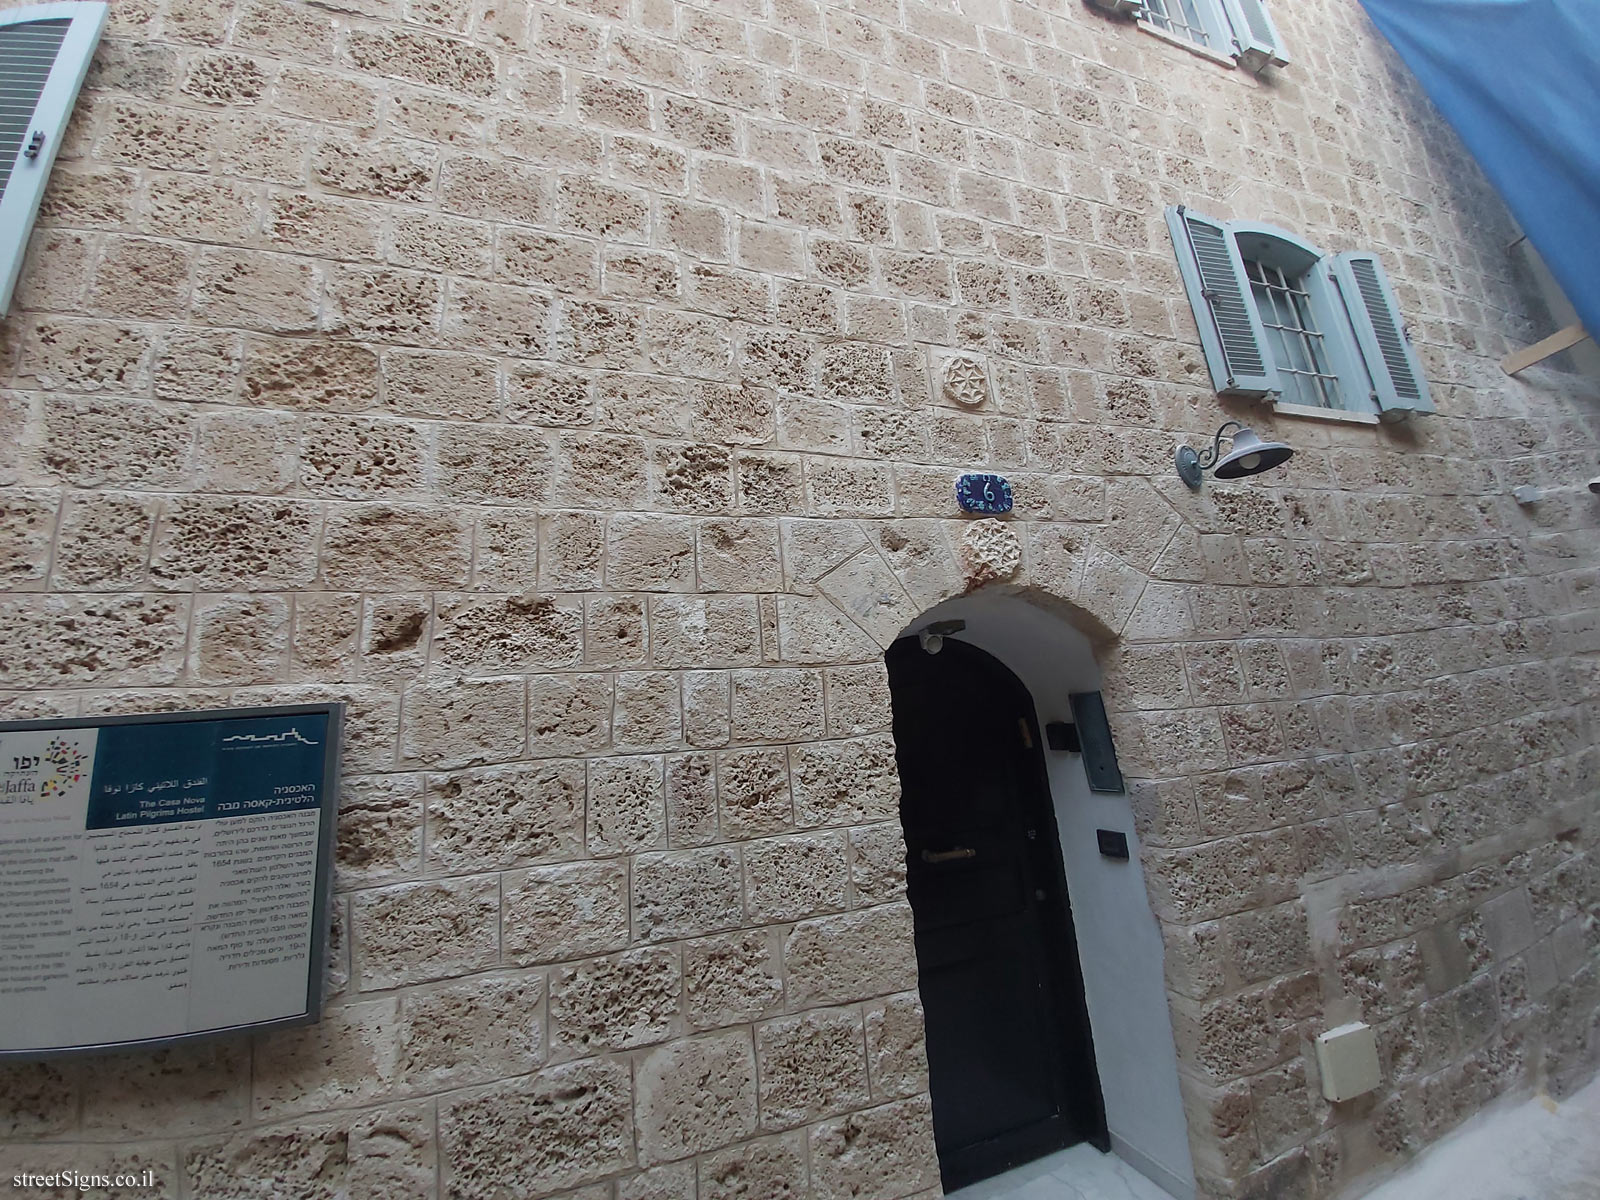 Old Jaffa - The Casa Nova Latin Pilgrims Hostel